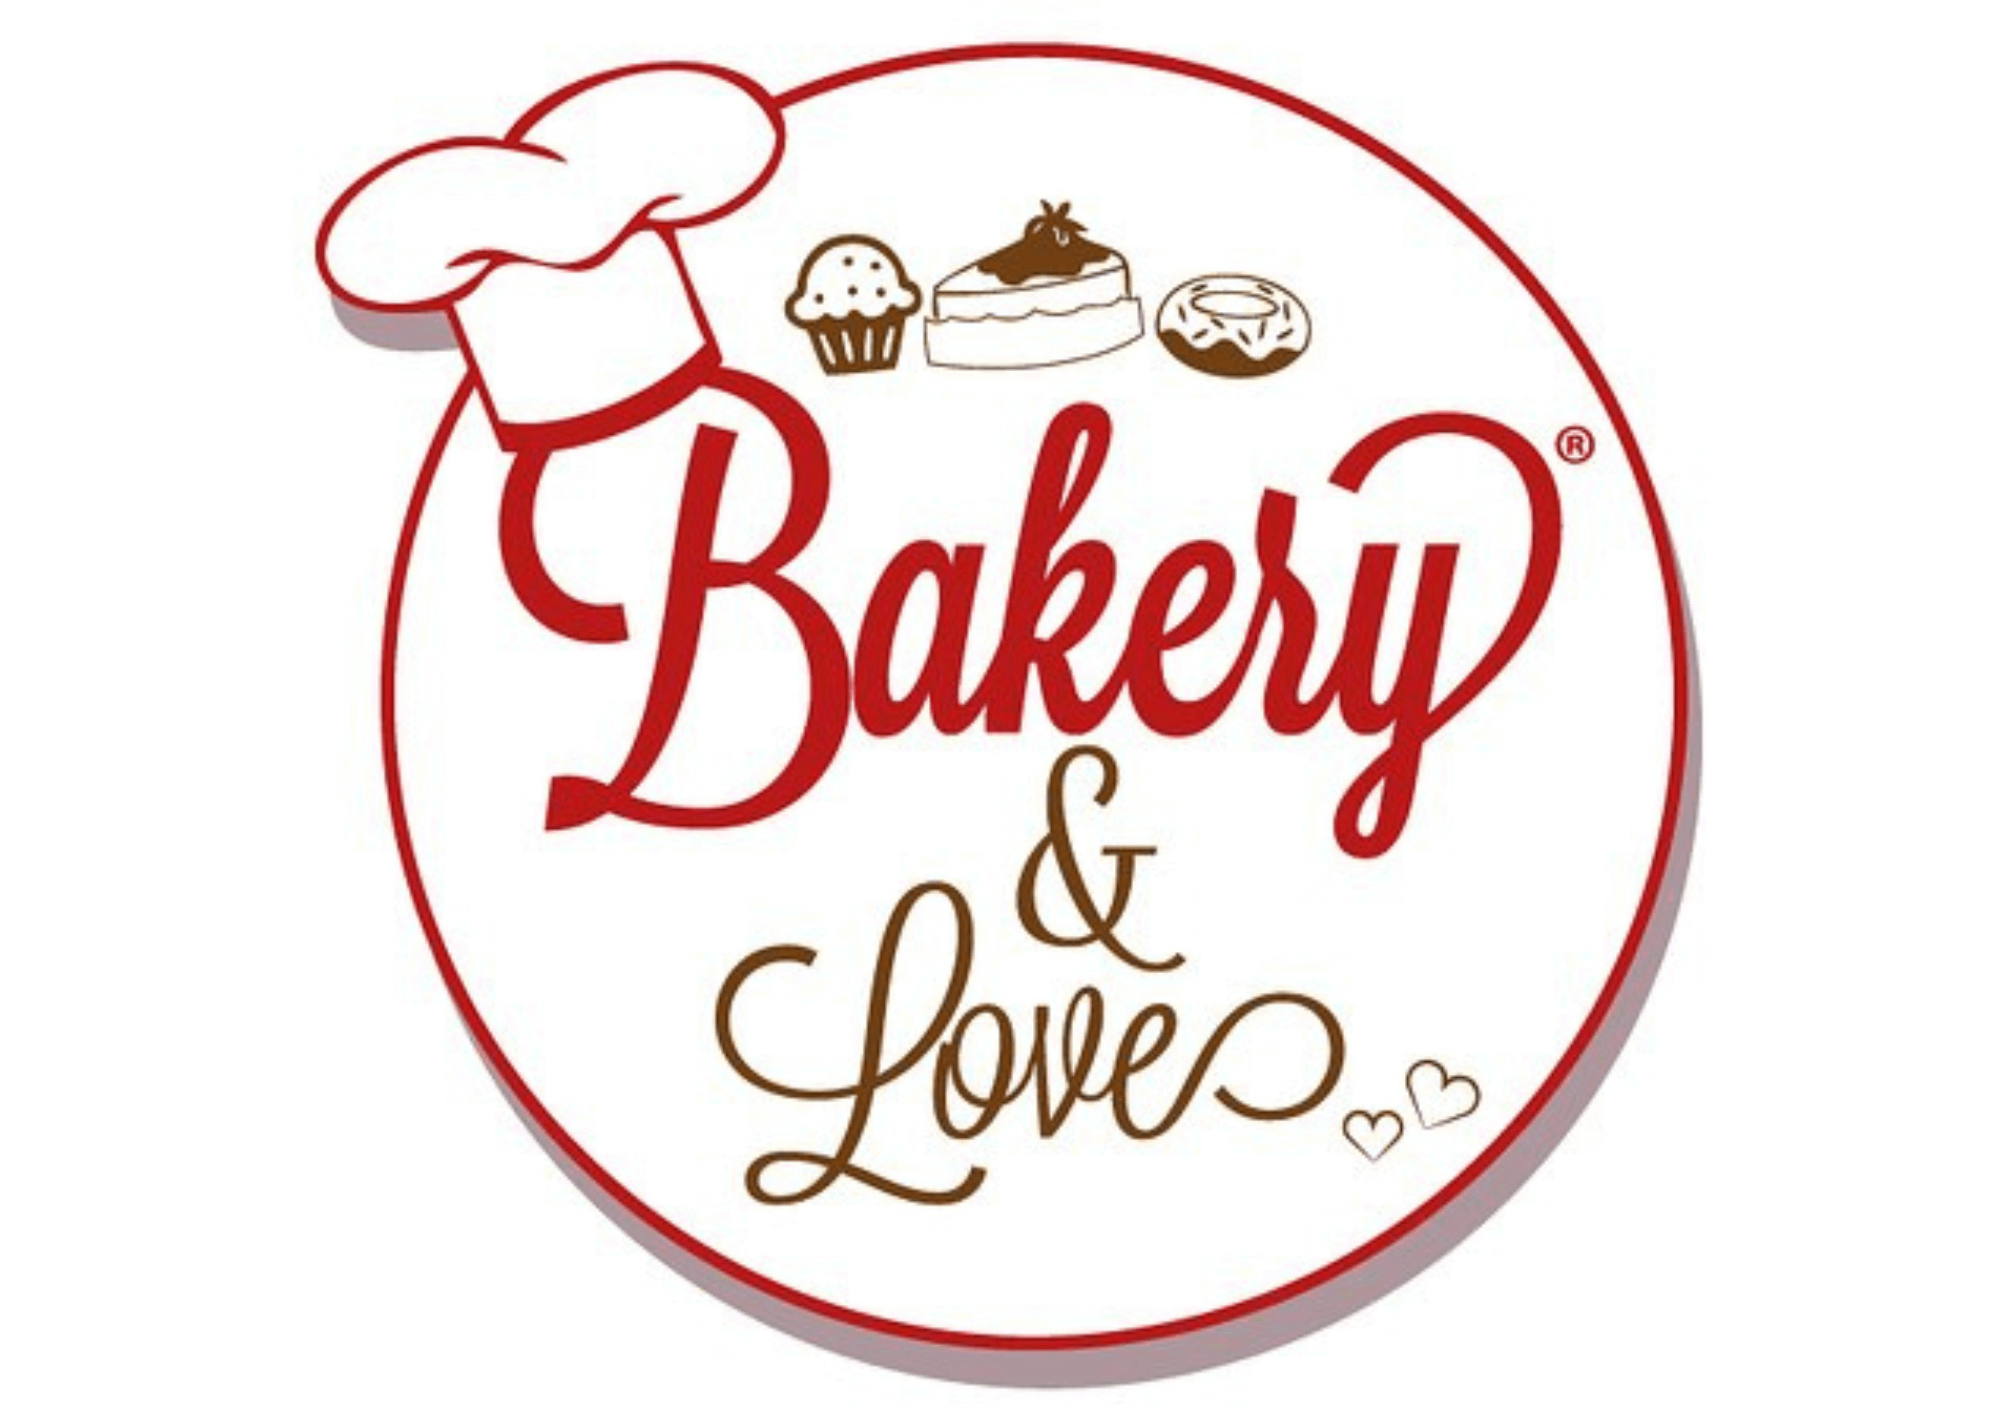 Bakery e love